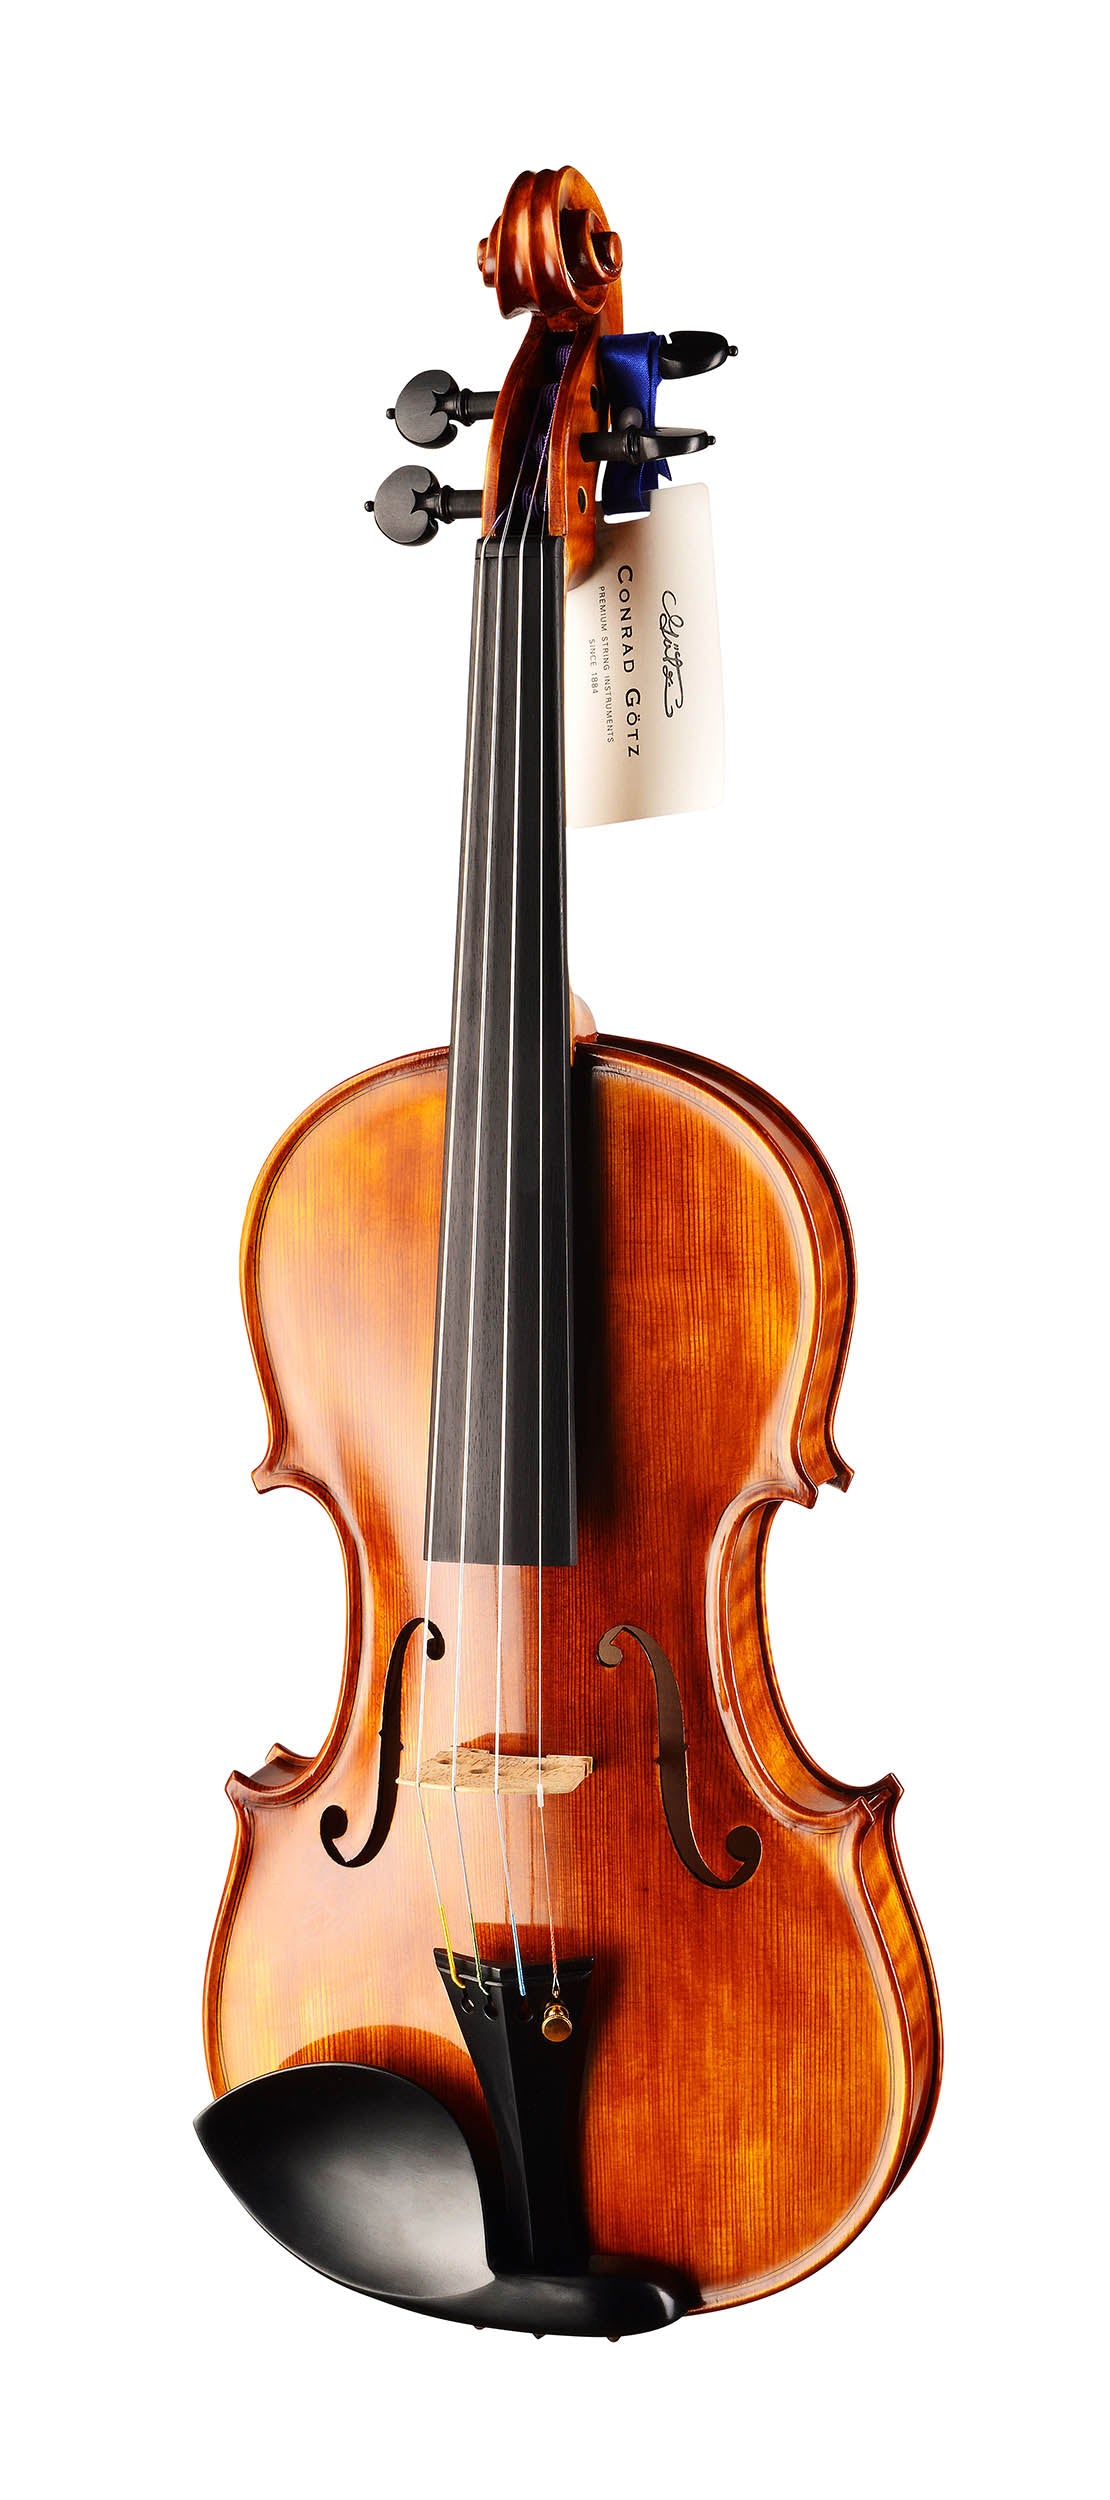 GOLDEN STATE Violin #123 GS